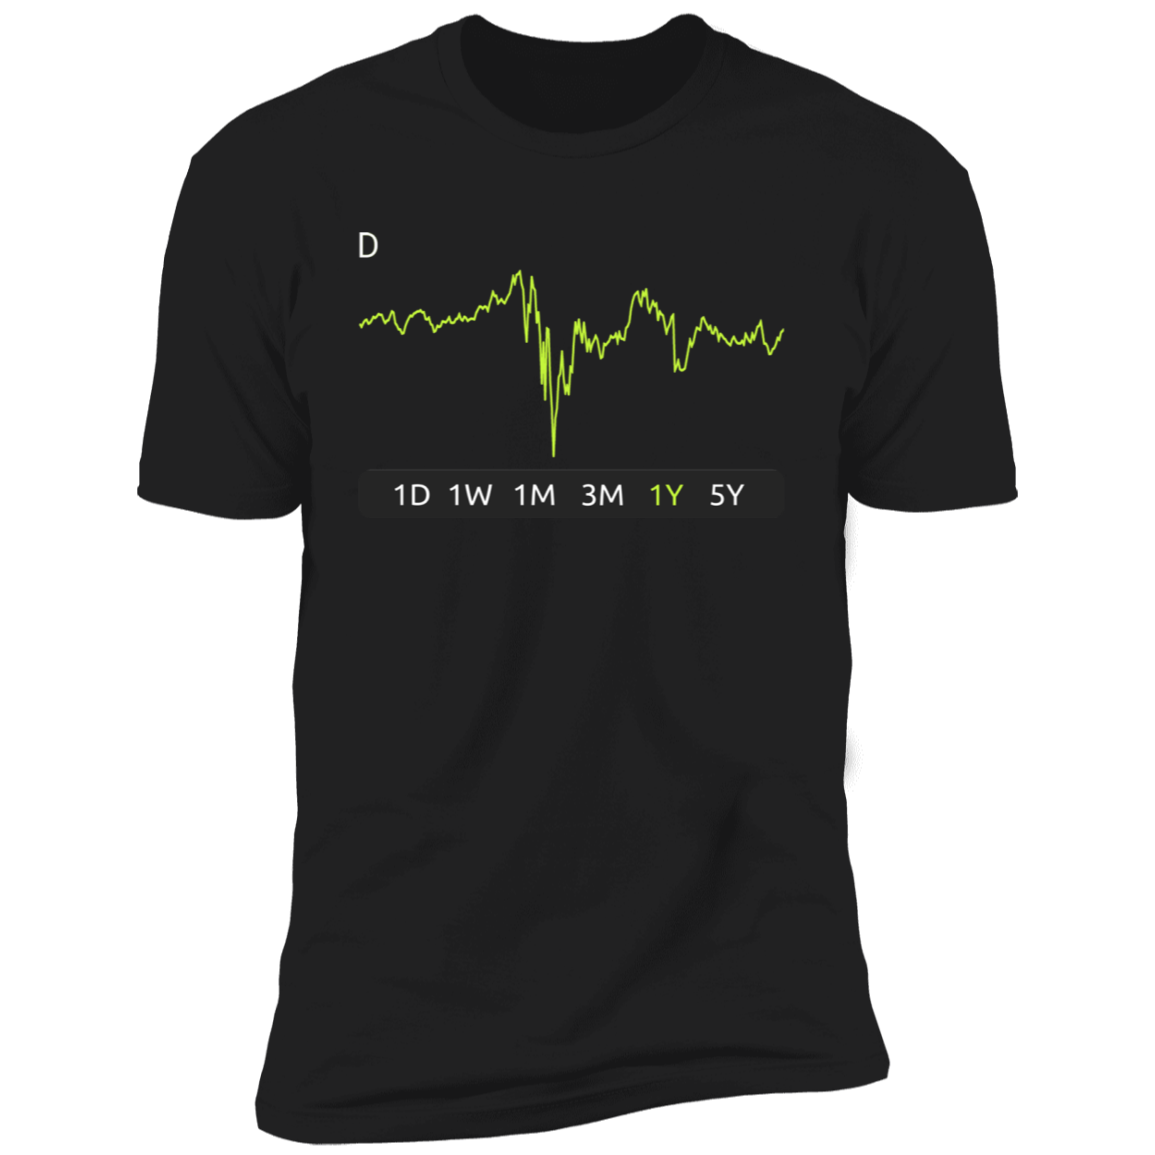 D Stock 1y Premium T-Shirt